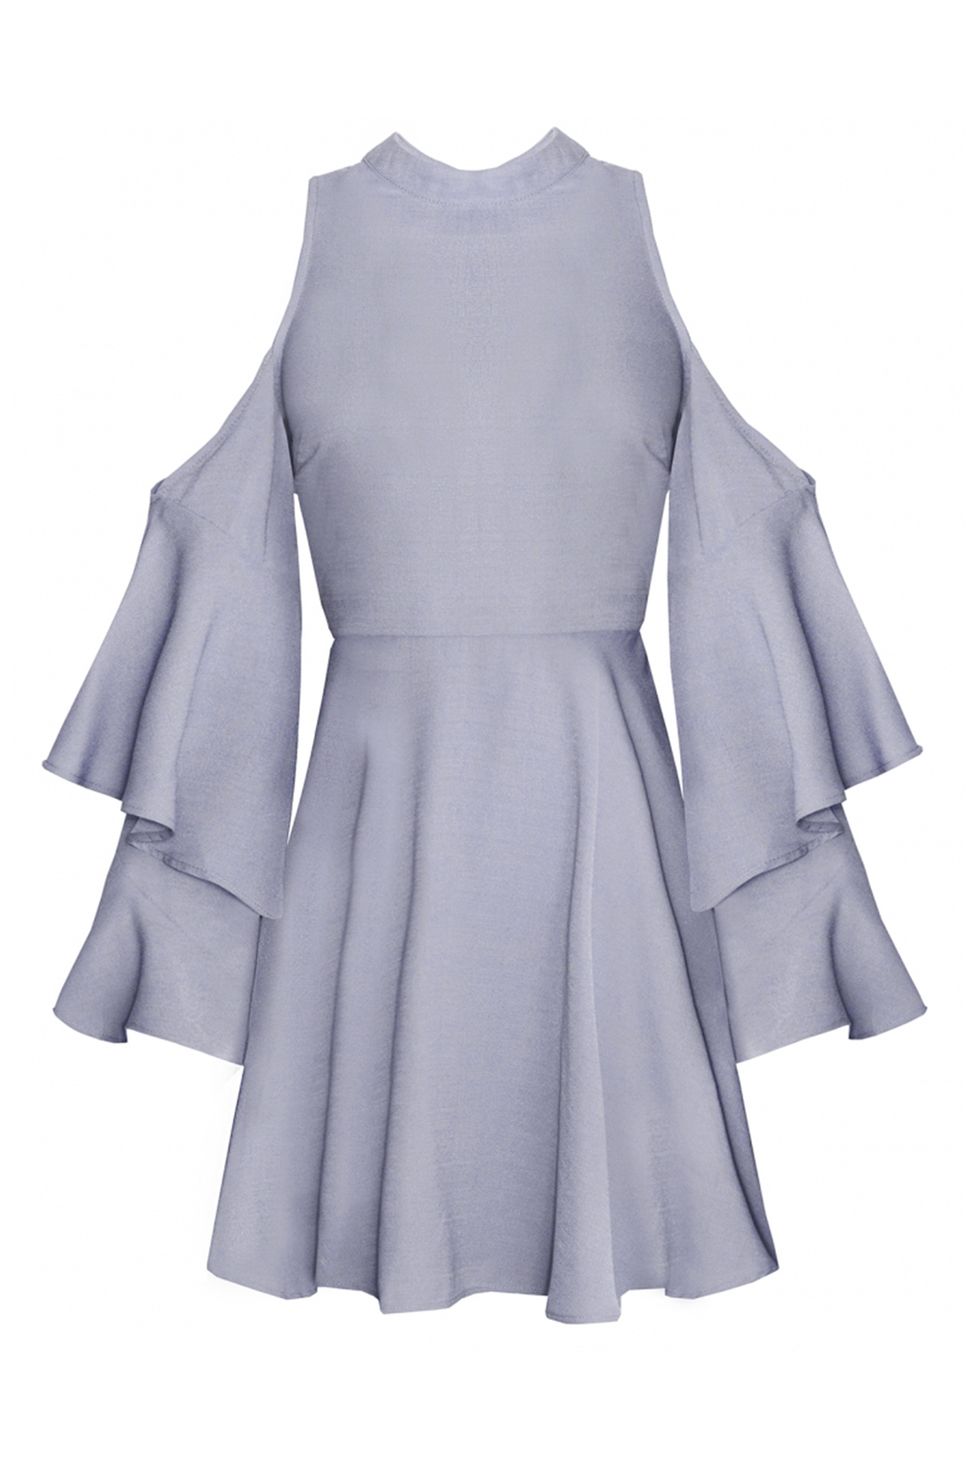 <p>Pixie Market Grey Blue Ruffled Cold Shoulder Dress, $49; <a href="http://www.pixiemarket.com/grey-blue-ruffled-cold-shoulder-dress.html" target="_blank">pixiemarket.com</a></p>